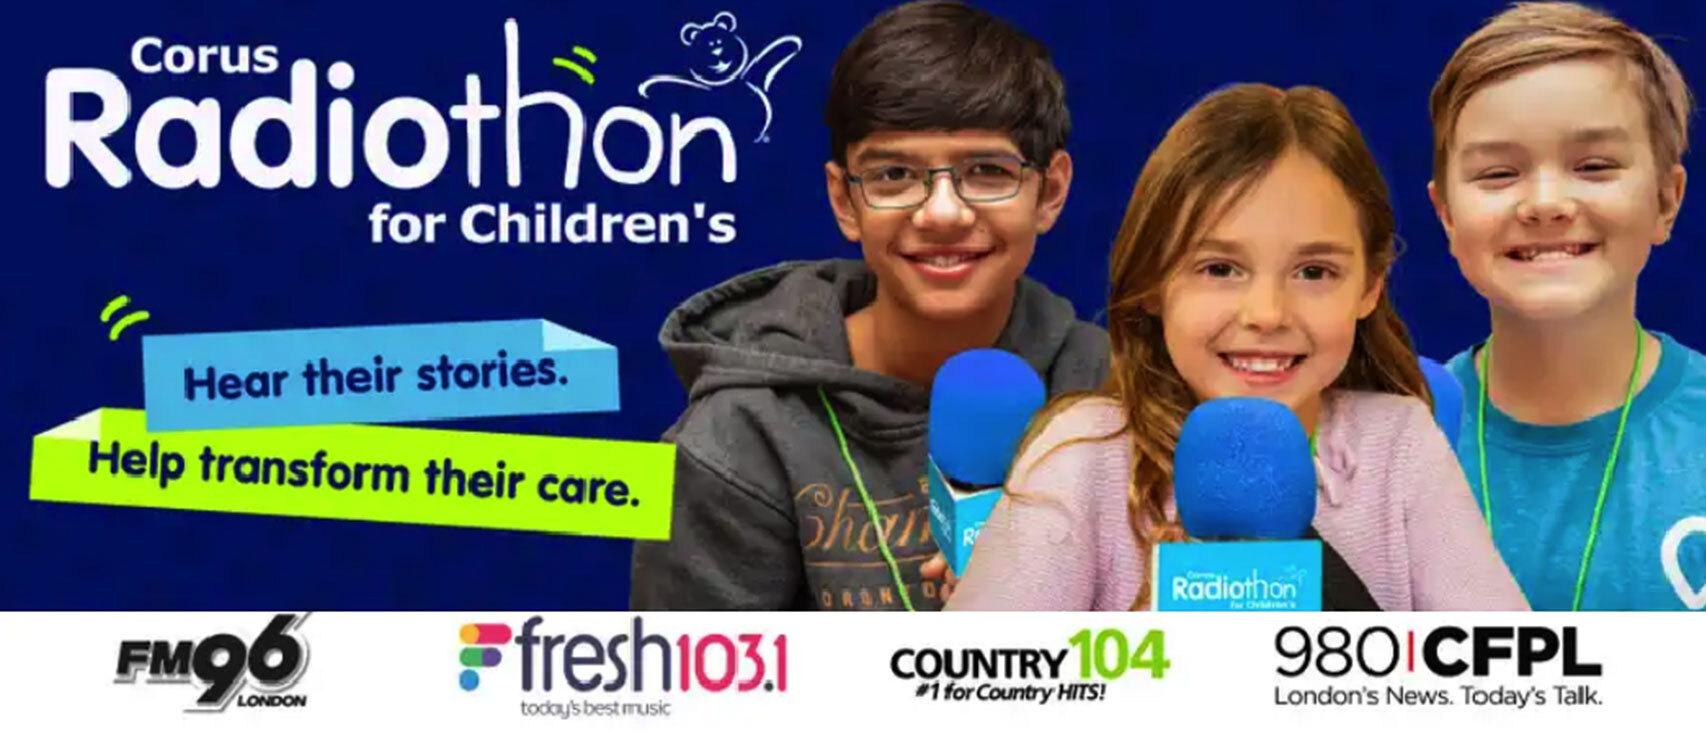 Corus Radiothon for Children’s Health Foundation